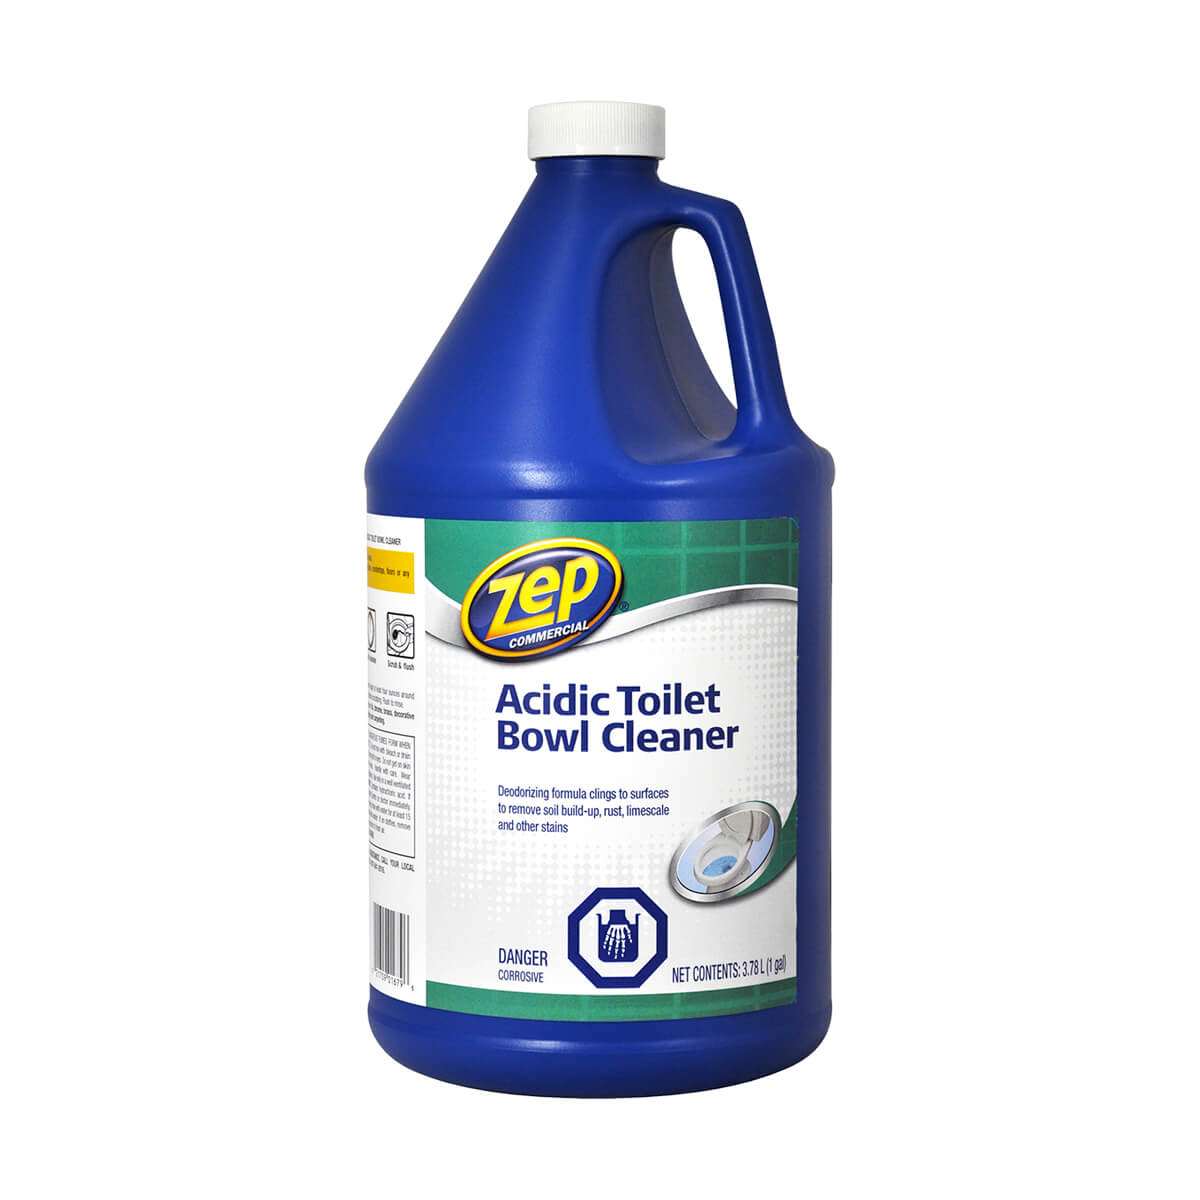 Zep Commercial Acidic Toilet Bowl Cleaner - 3.78 L